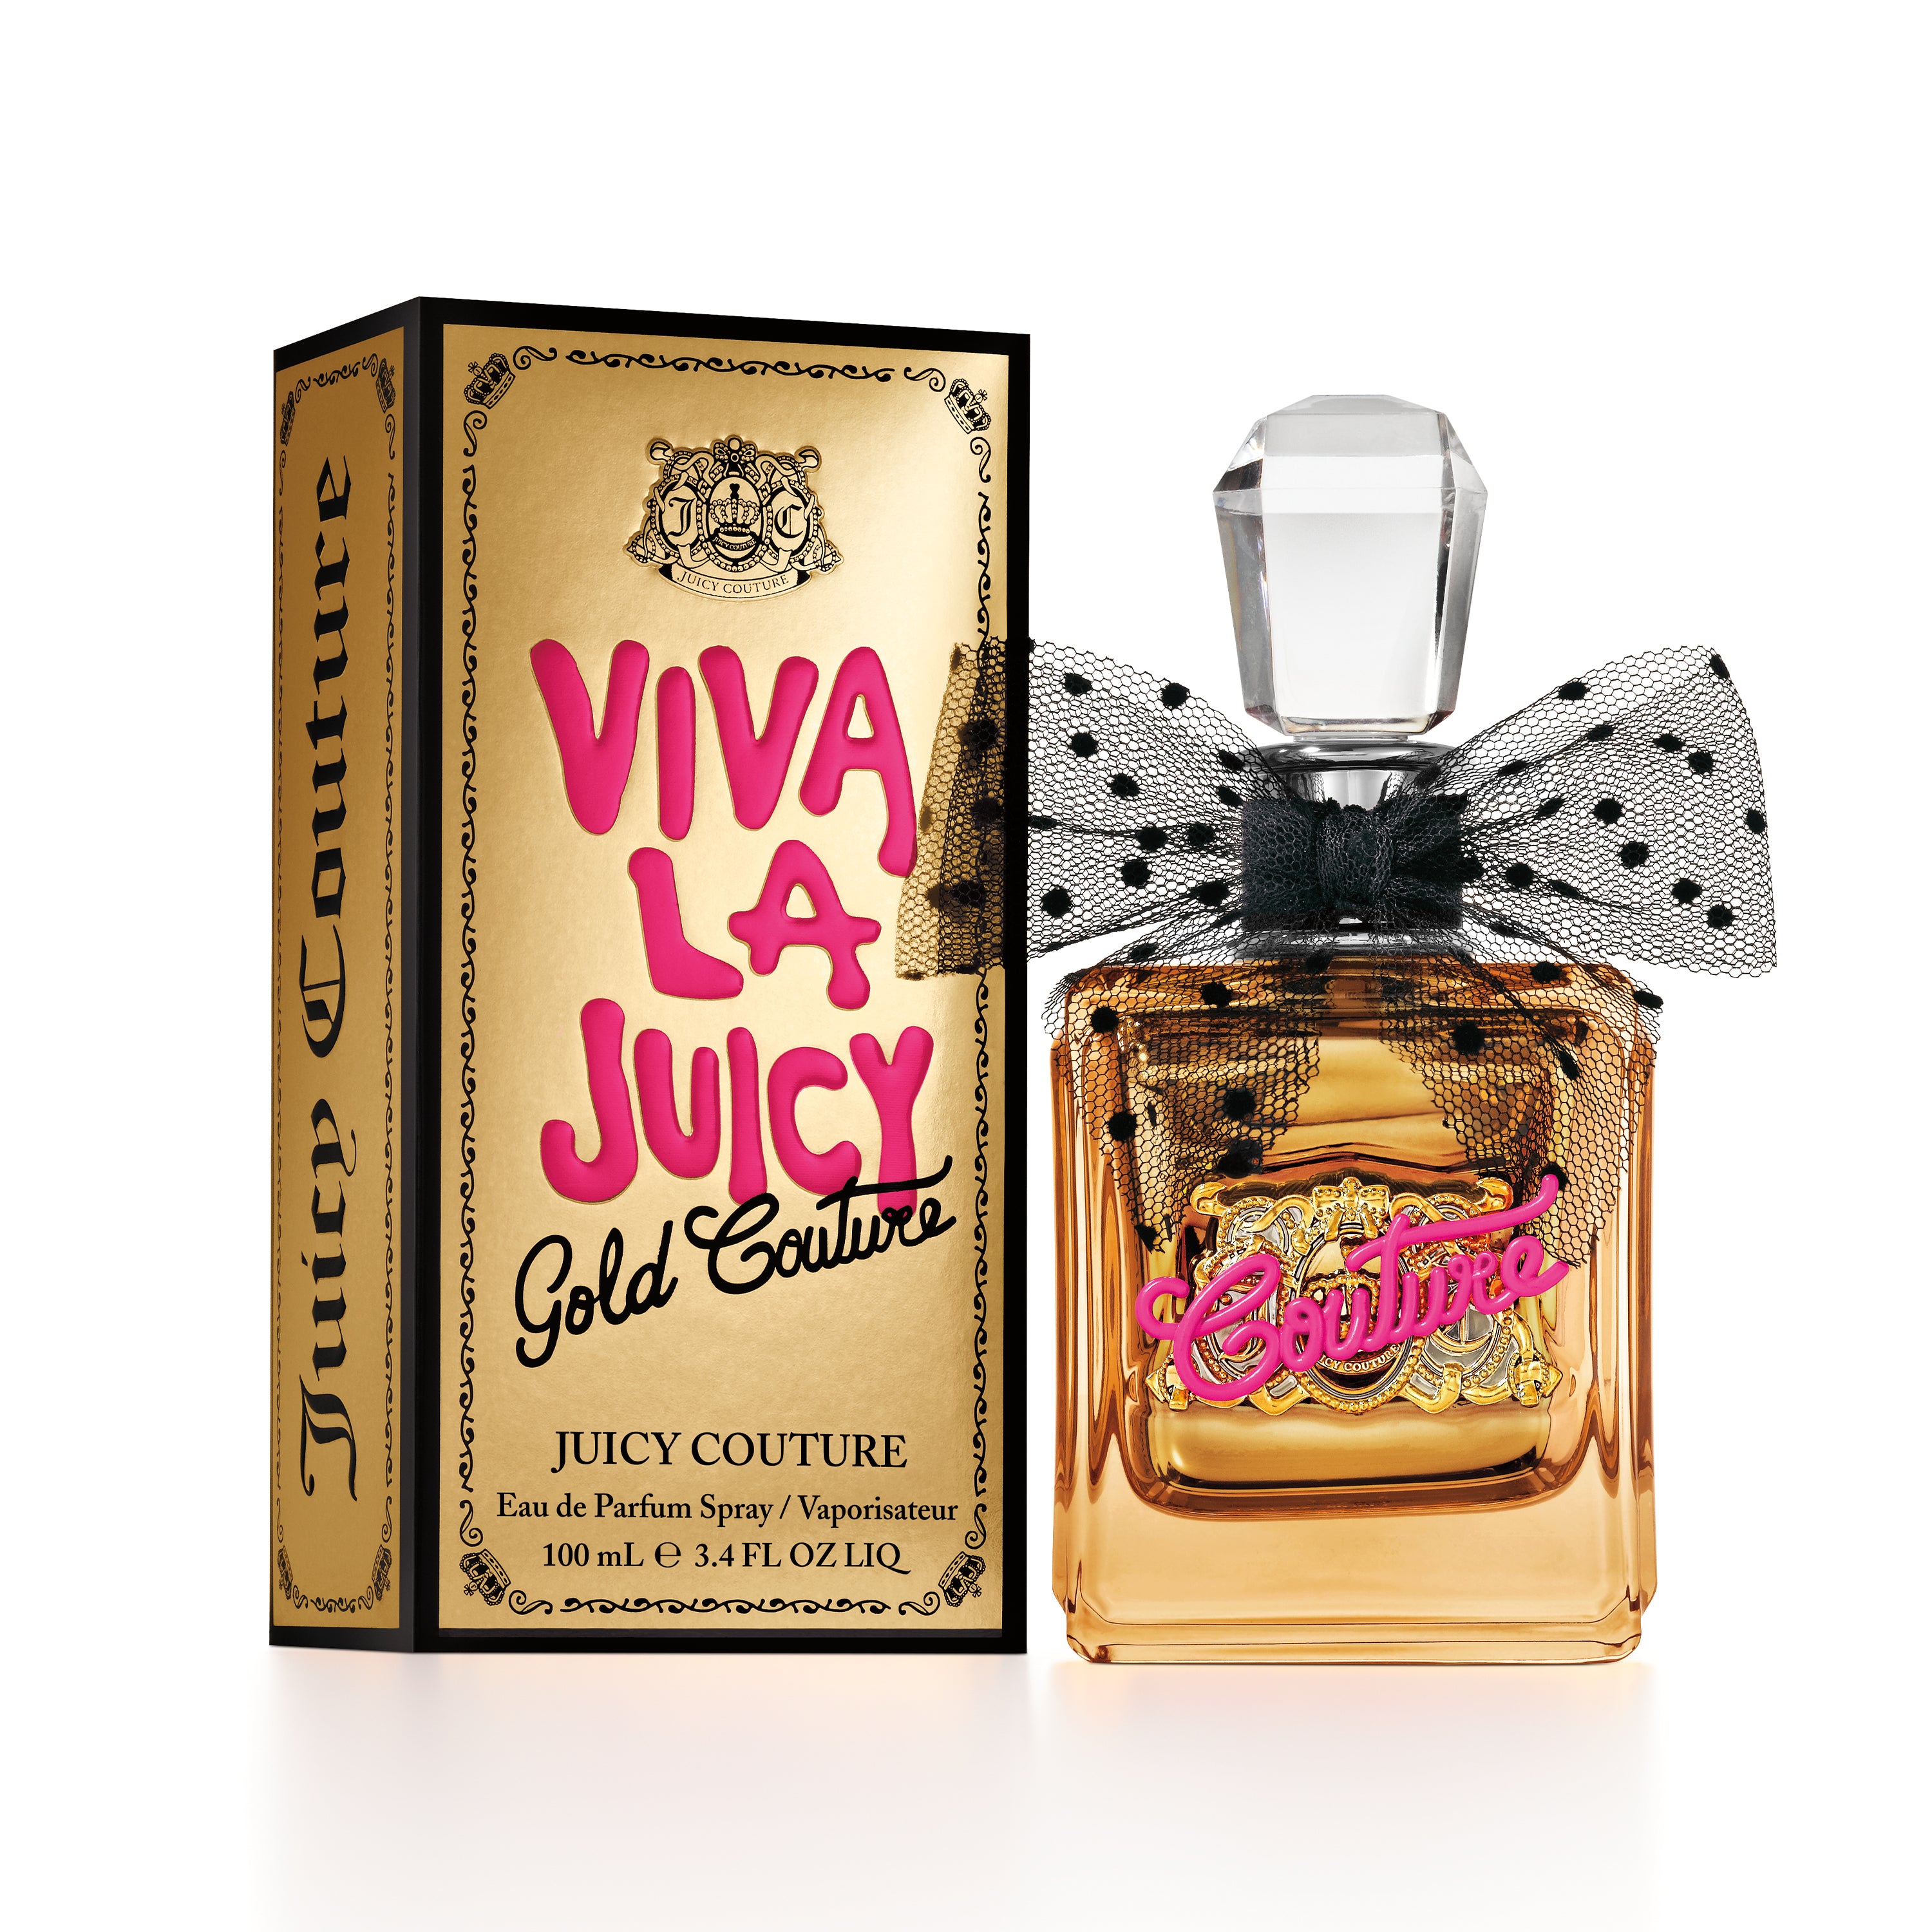 Viva La Juicy Gold Couture Eau de Parfum Spray - Juicy Couture